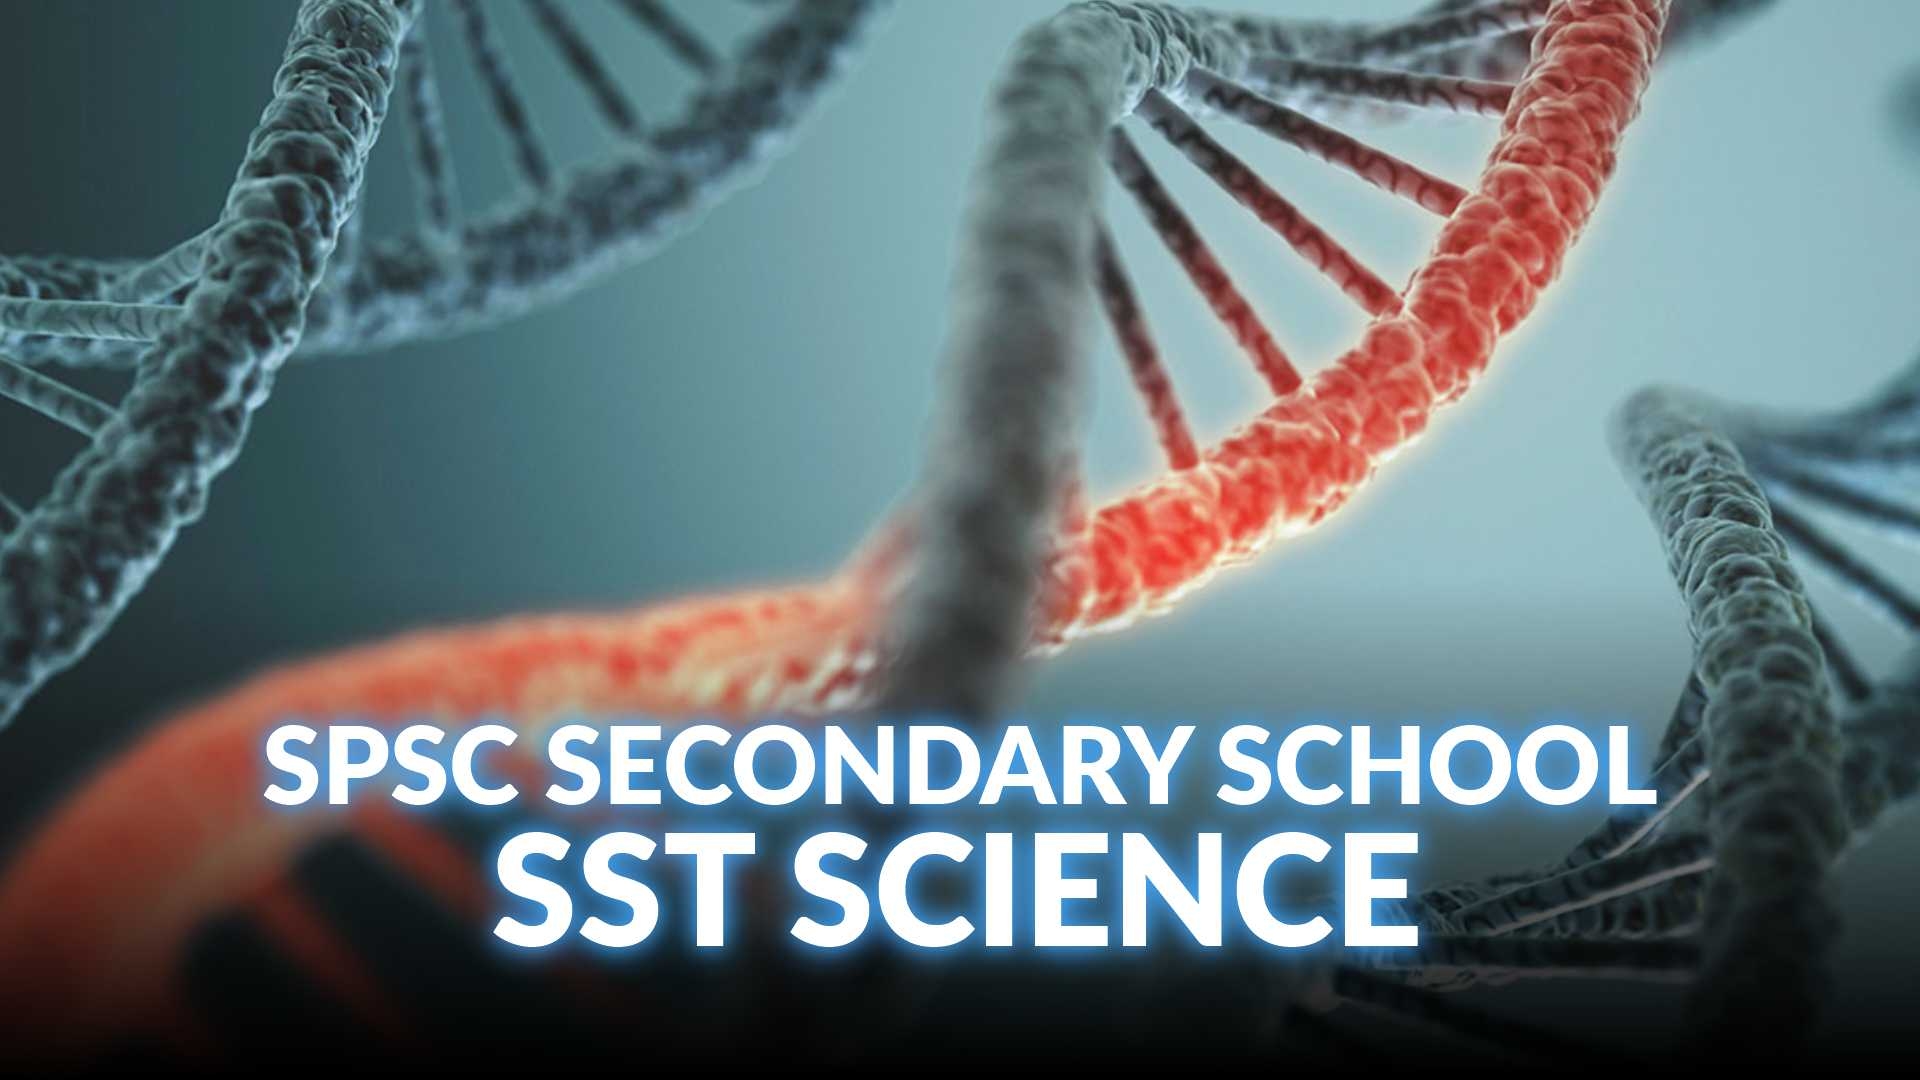 SPSC Secondary School Teacher (SST Science BS-16) Course